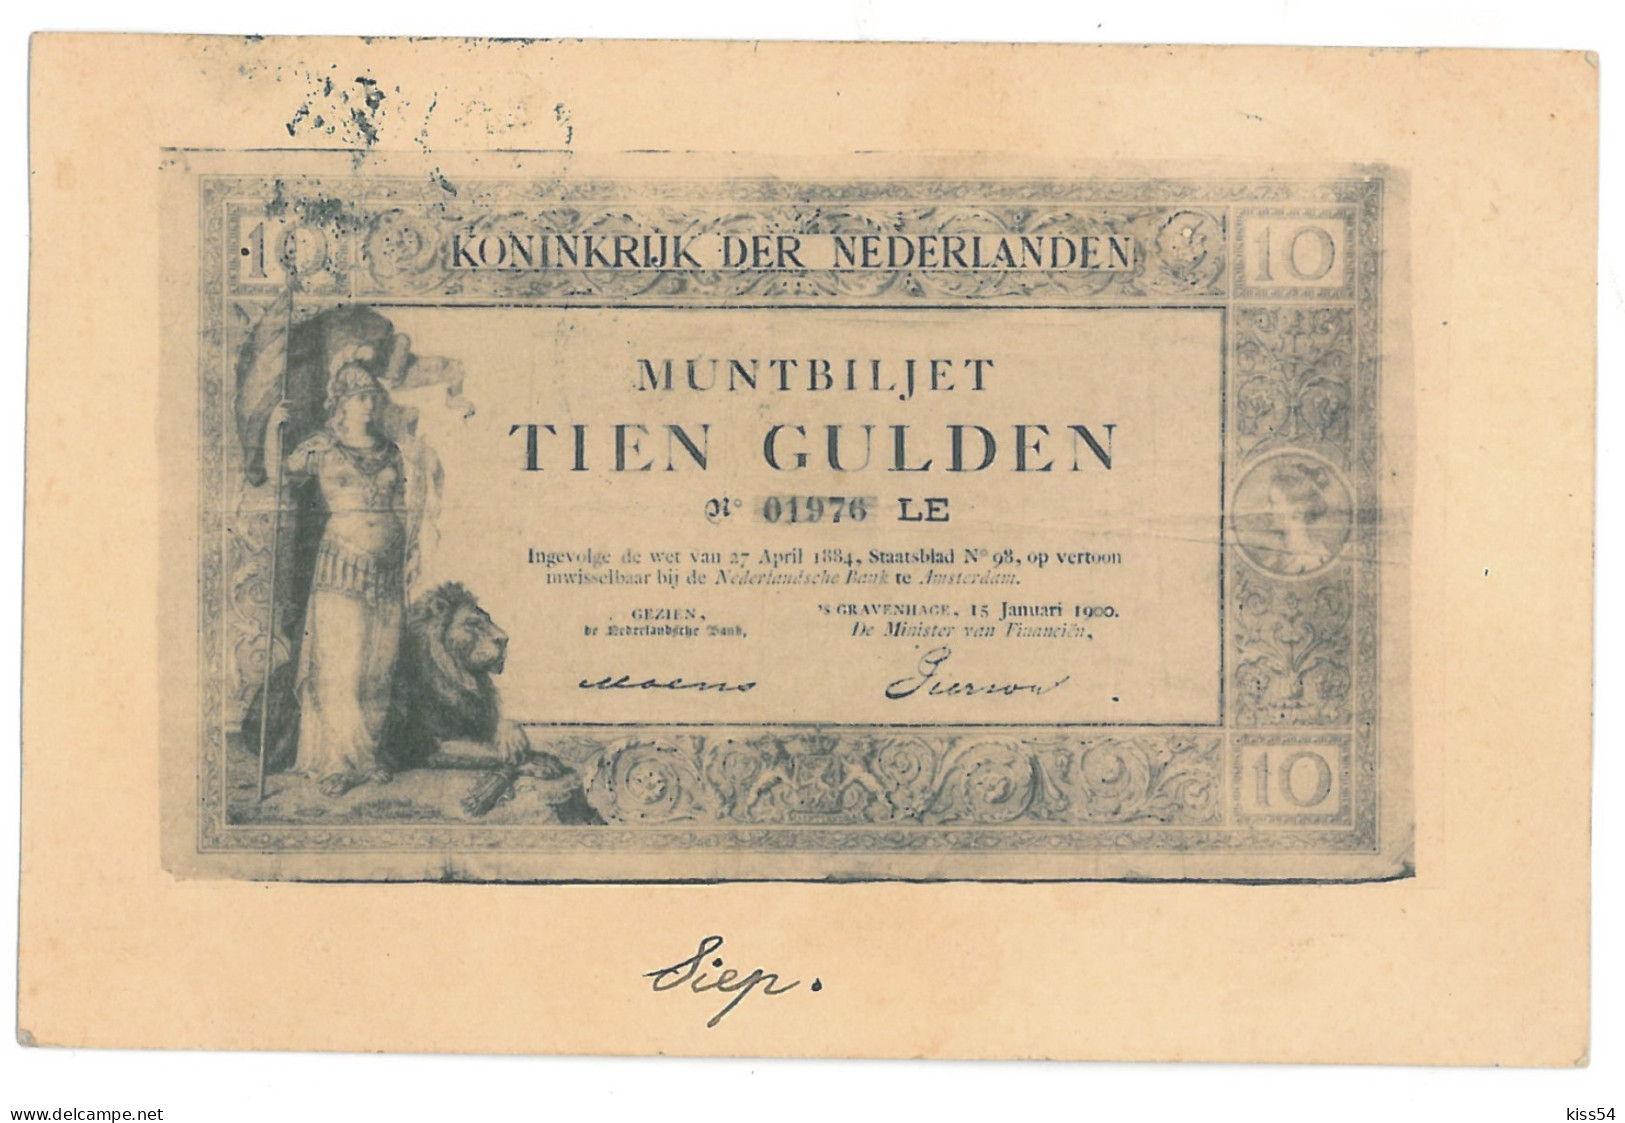 NED 4 - 12210 HOLLAND, Litho, Banknote 10 Gulden - Old Postcard - Used - 1902  - Monedas (representaciones)